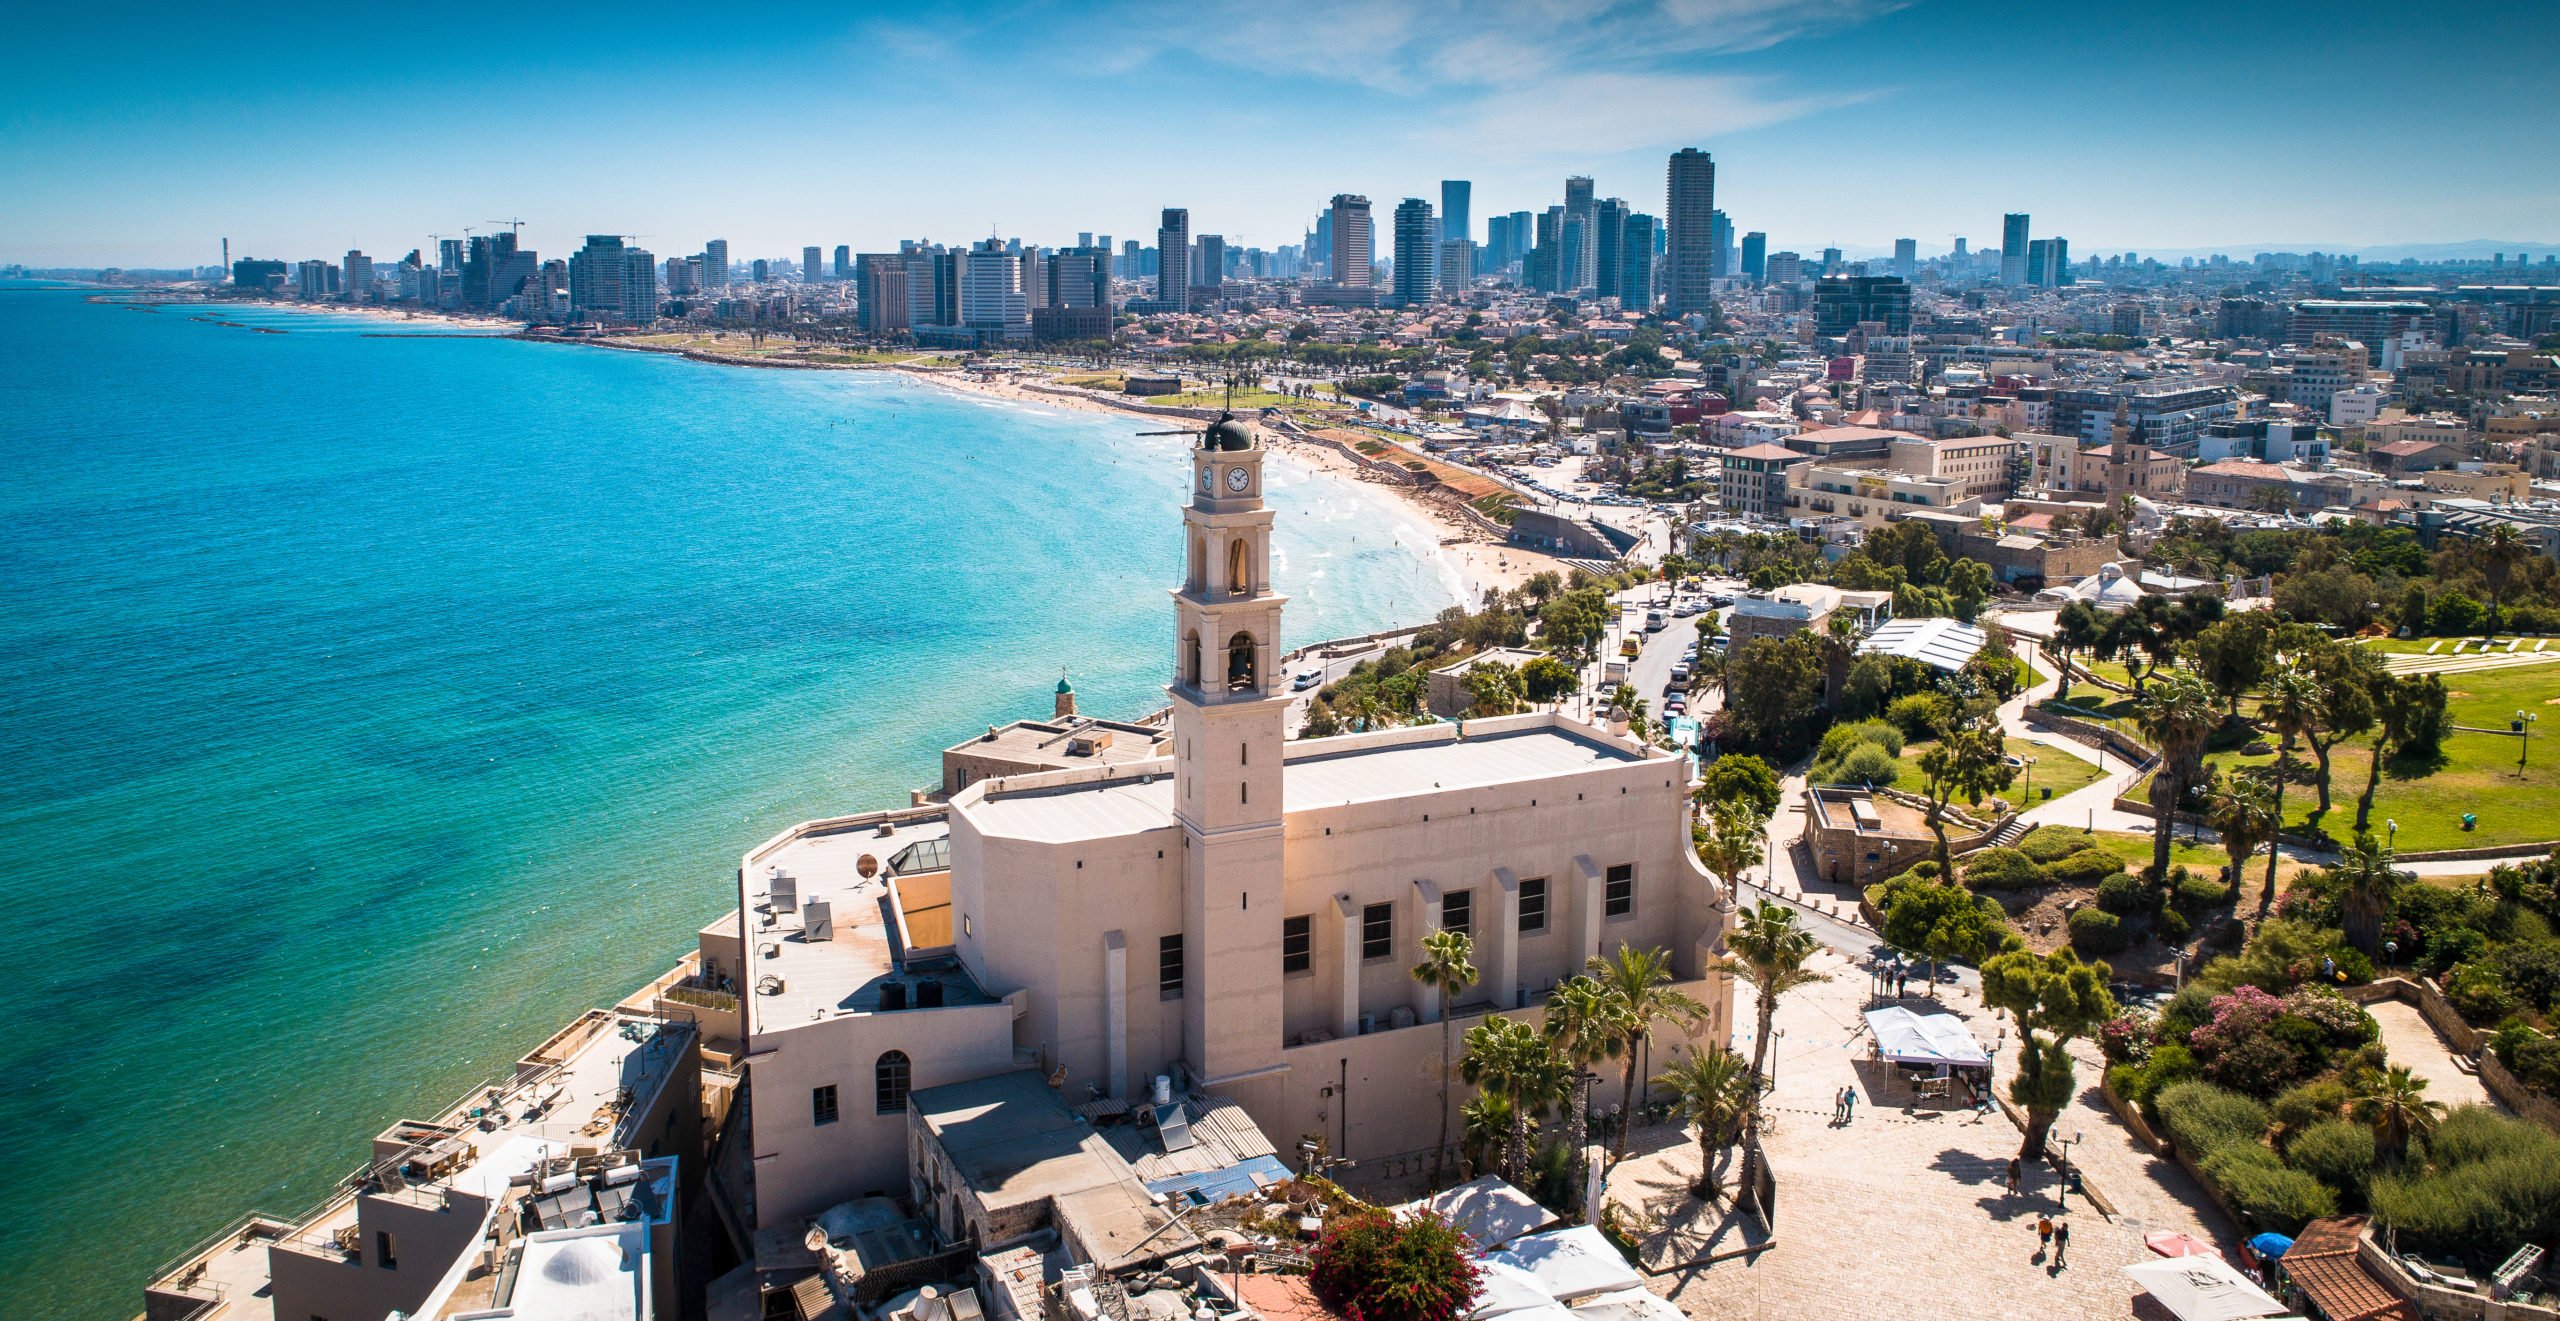 Discover Tel Aviv On The 13 Day Israel, Jordan, Dubai And Abu Dhabi Package Tour